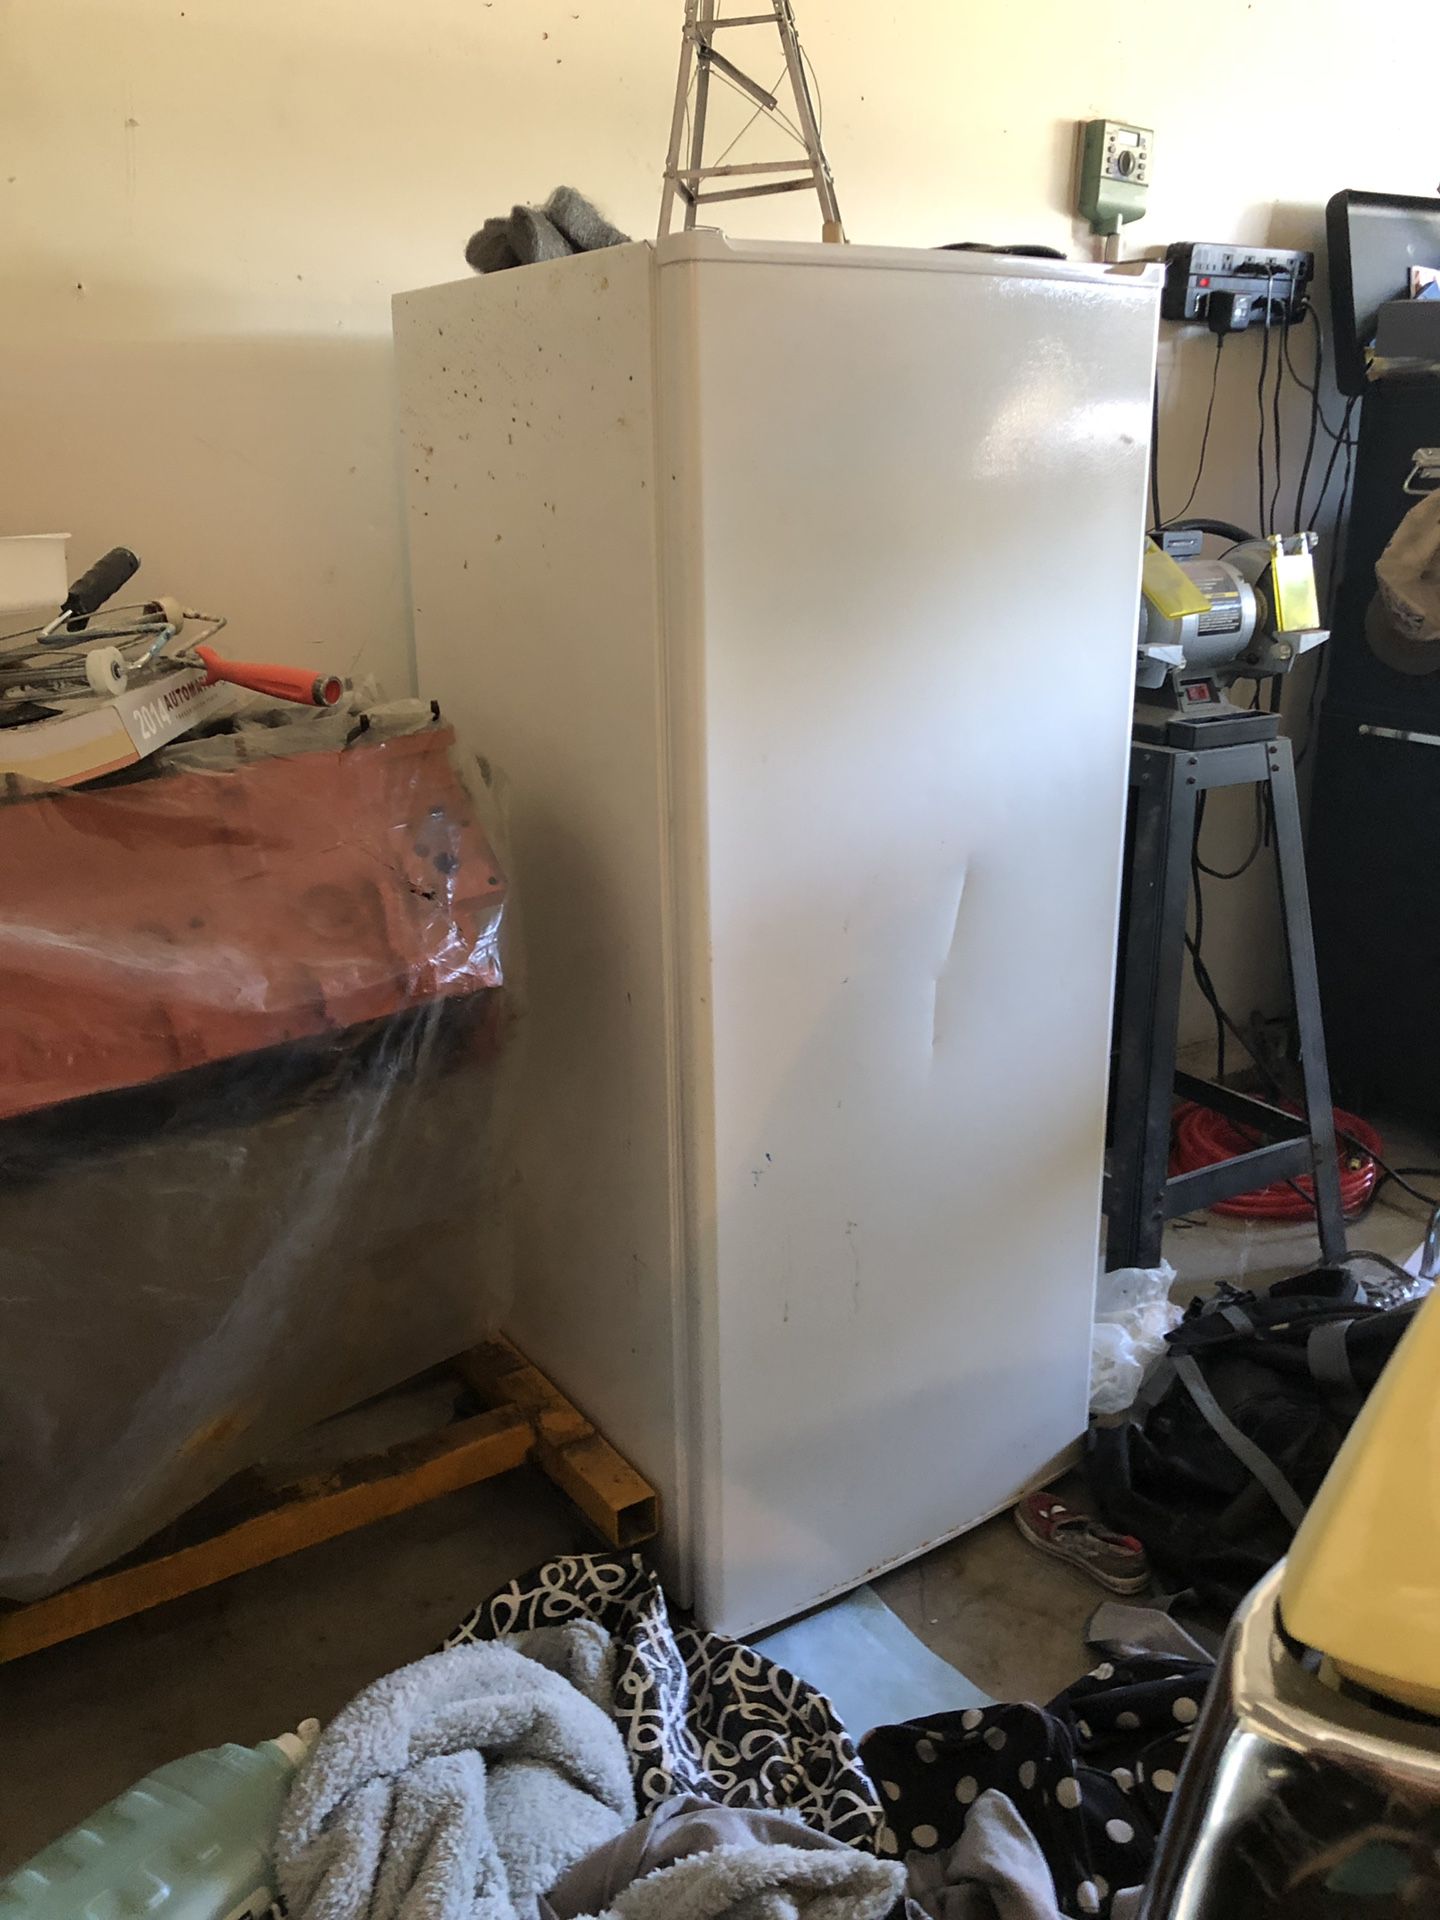 Small fridge / freezer